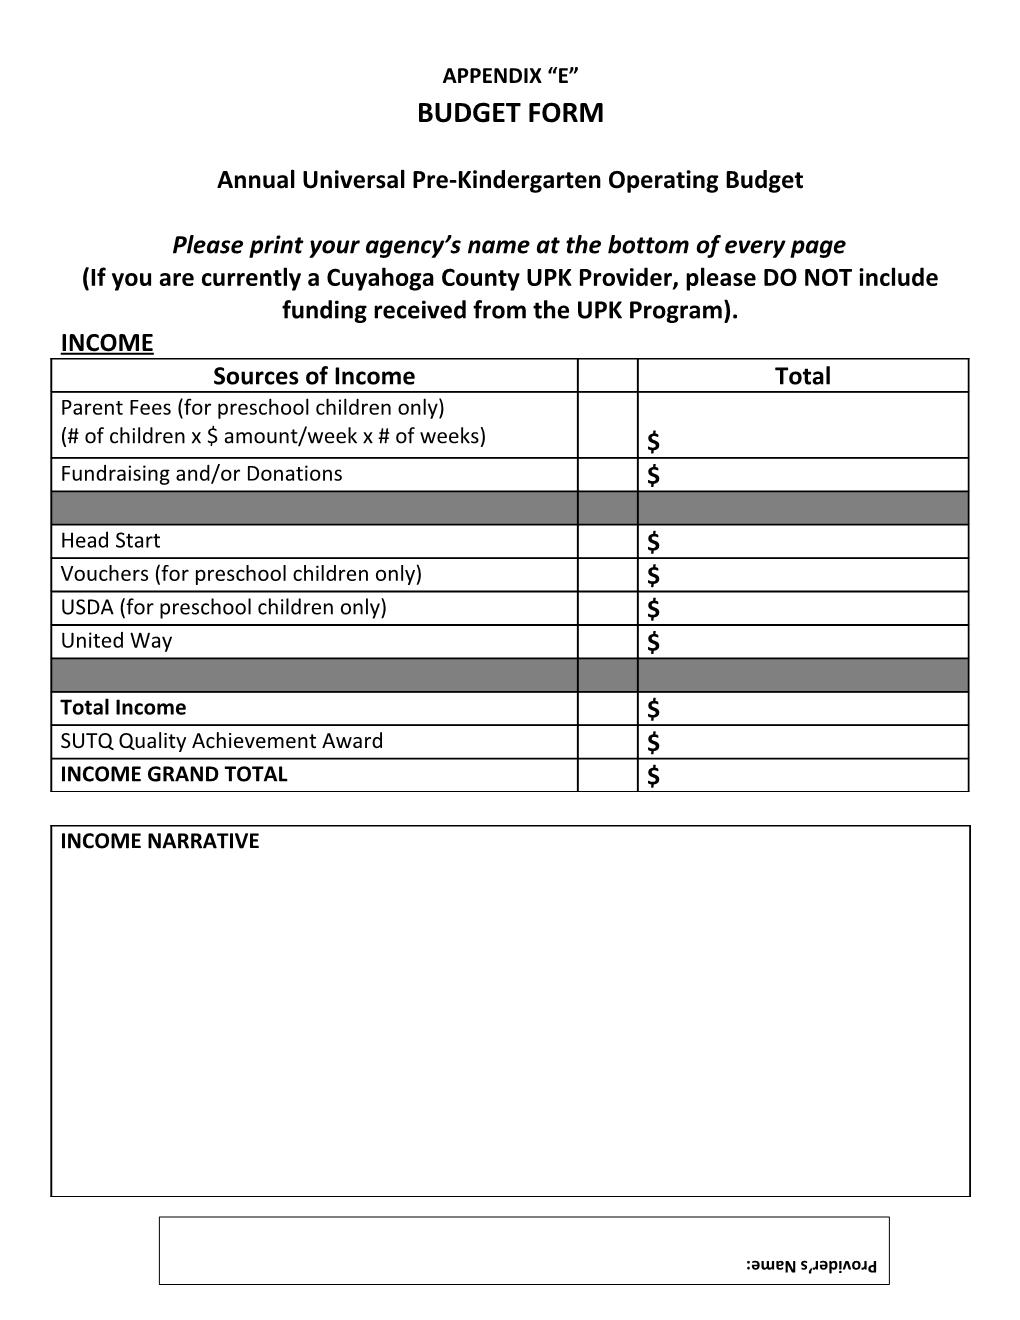 Annual Universal Pre-Kindergarten Operating Budget